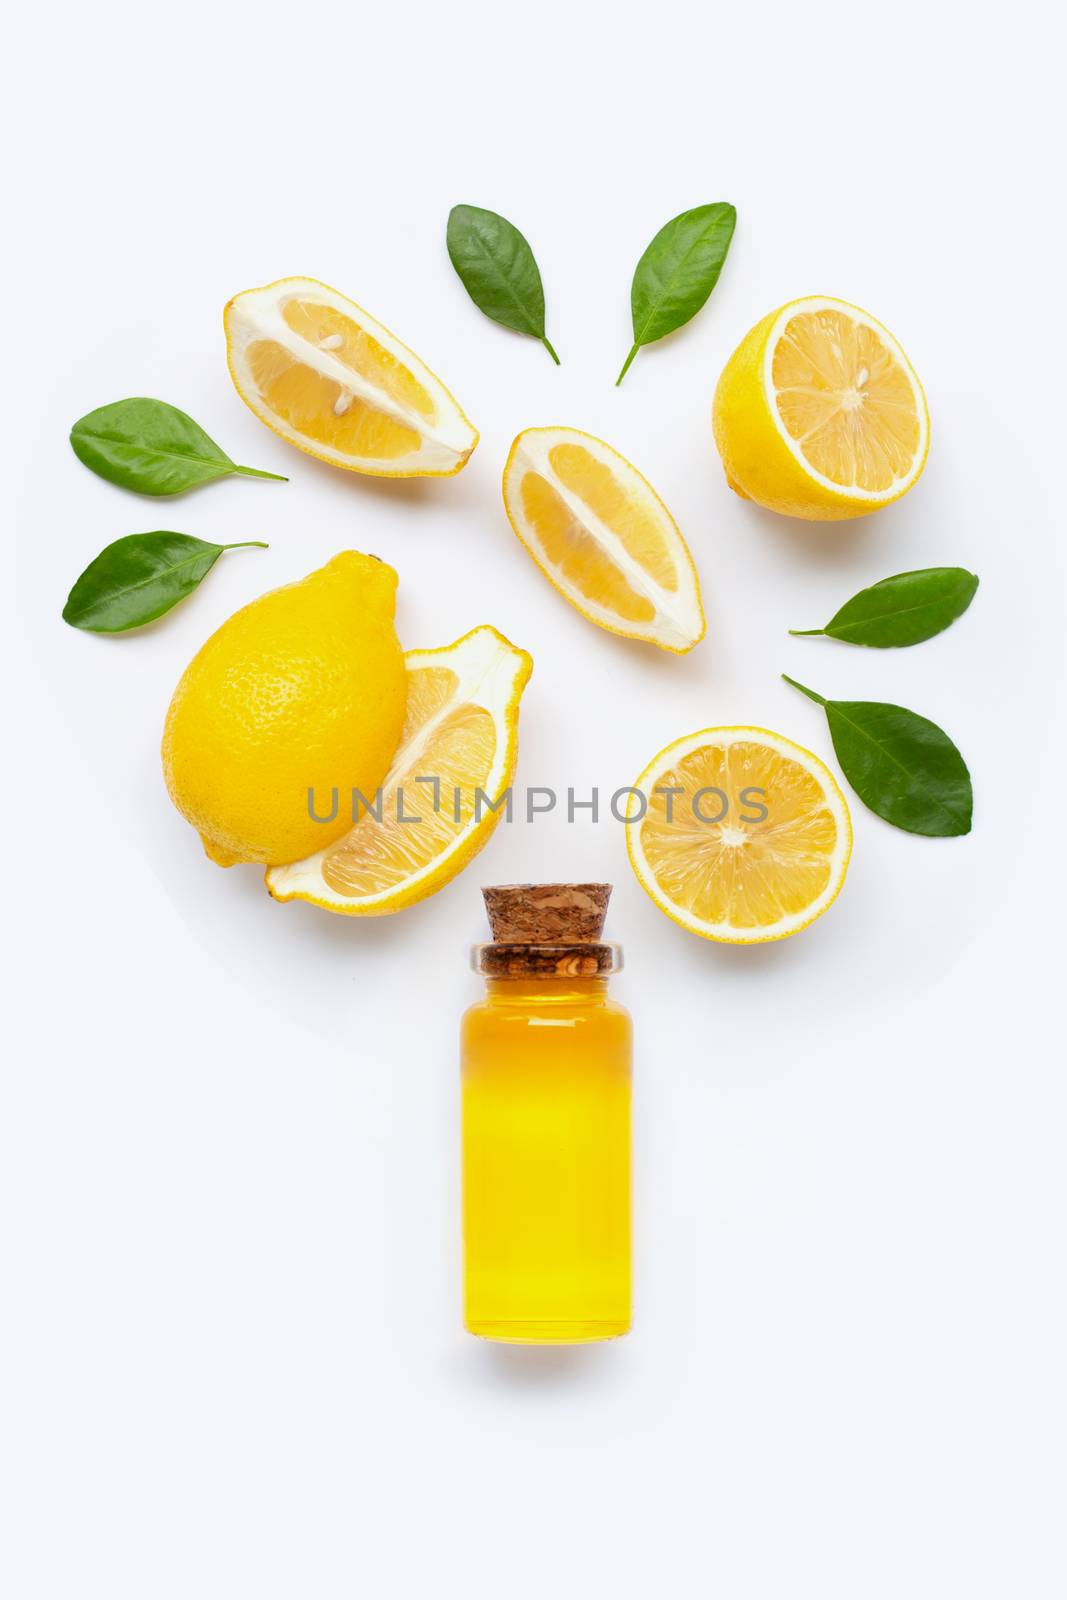 Fresh lemon with lemon essential oil on white  by Bowonpat